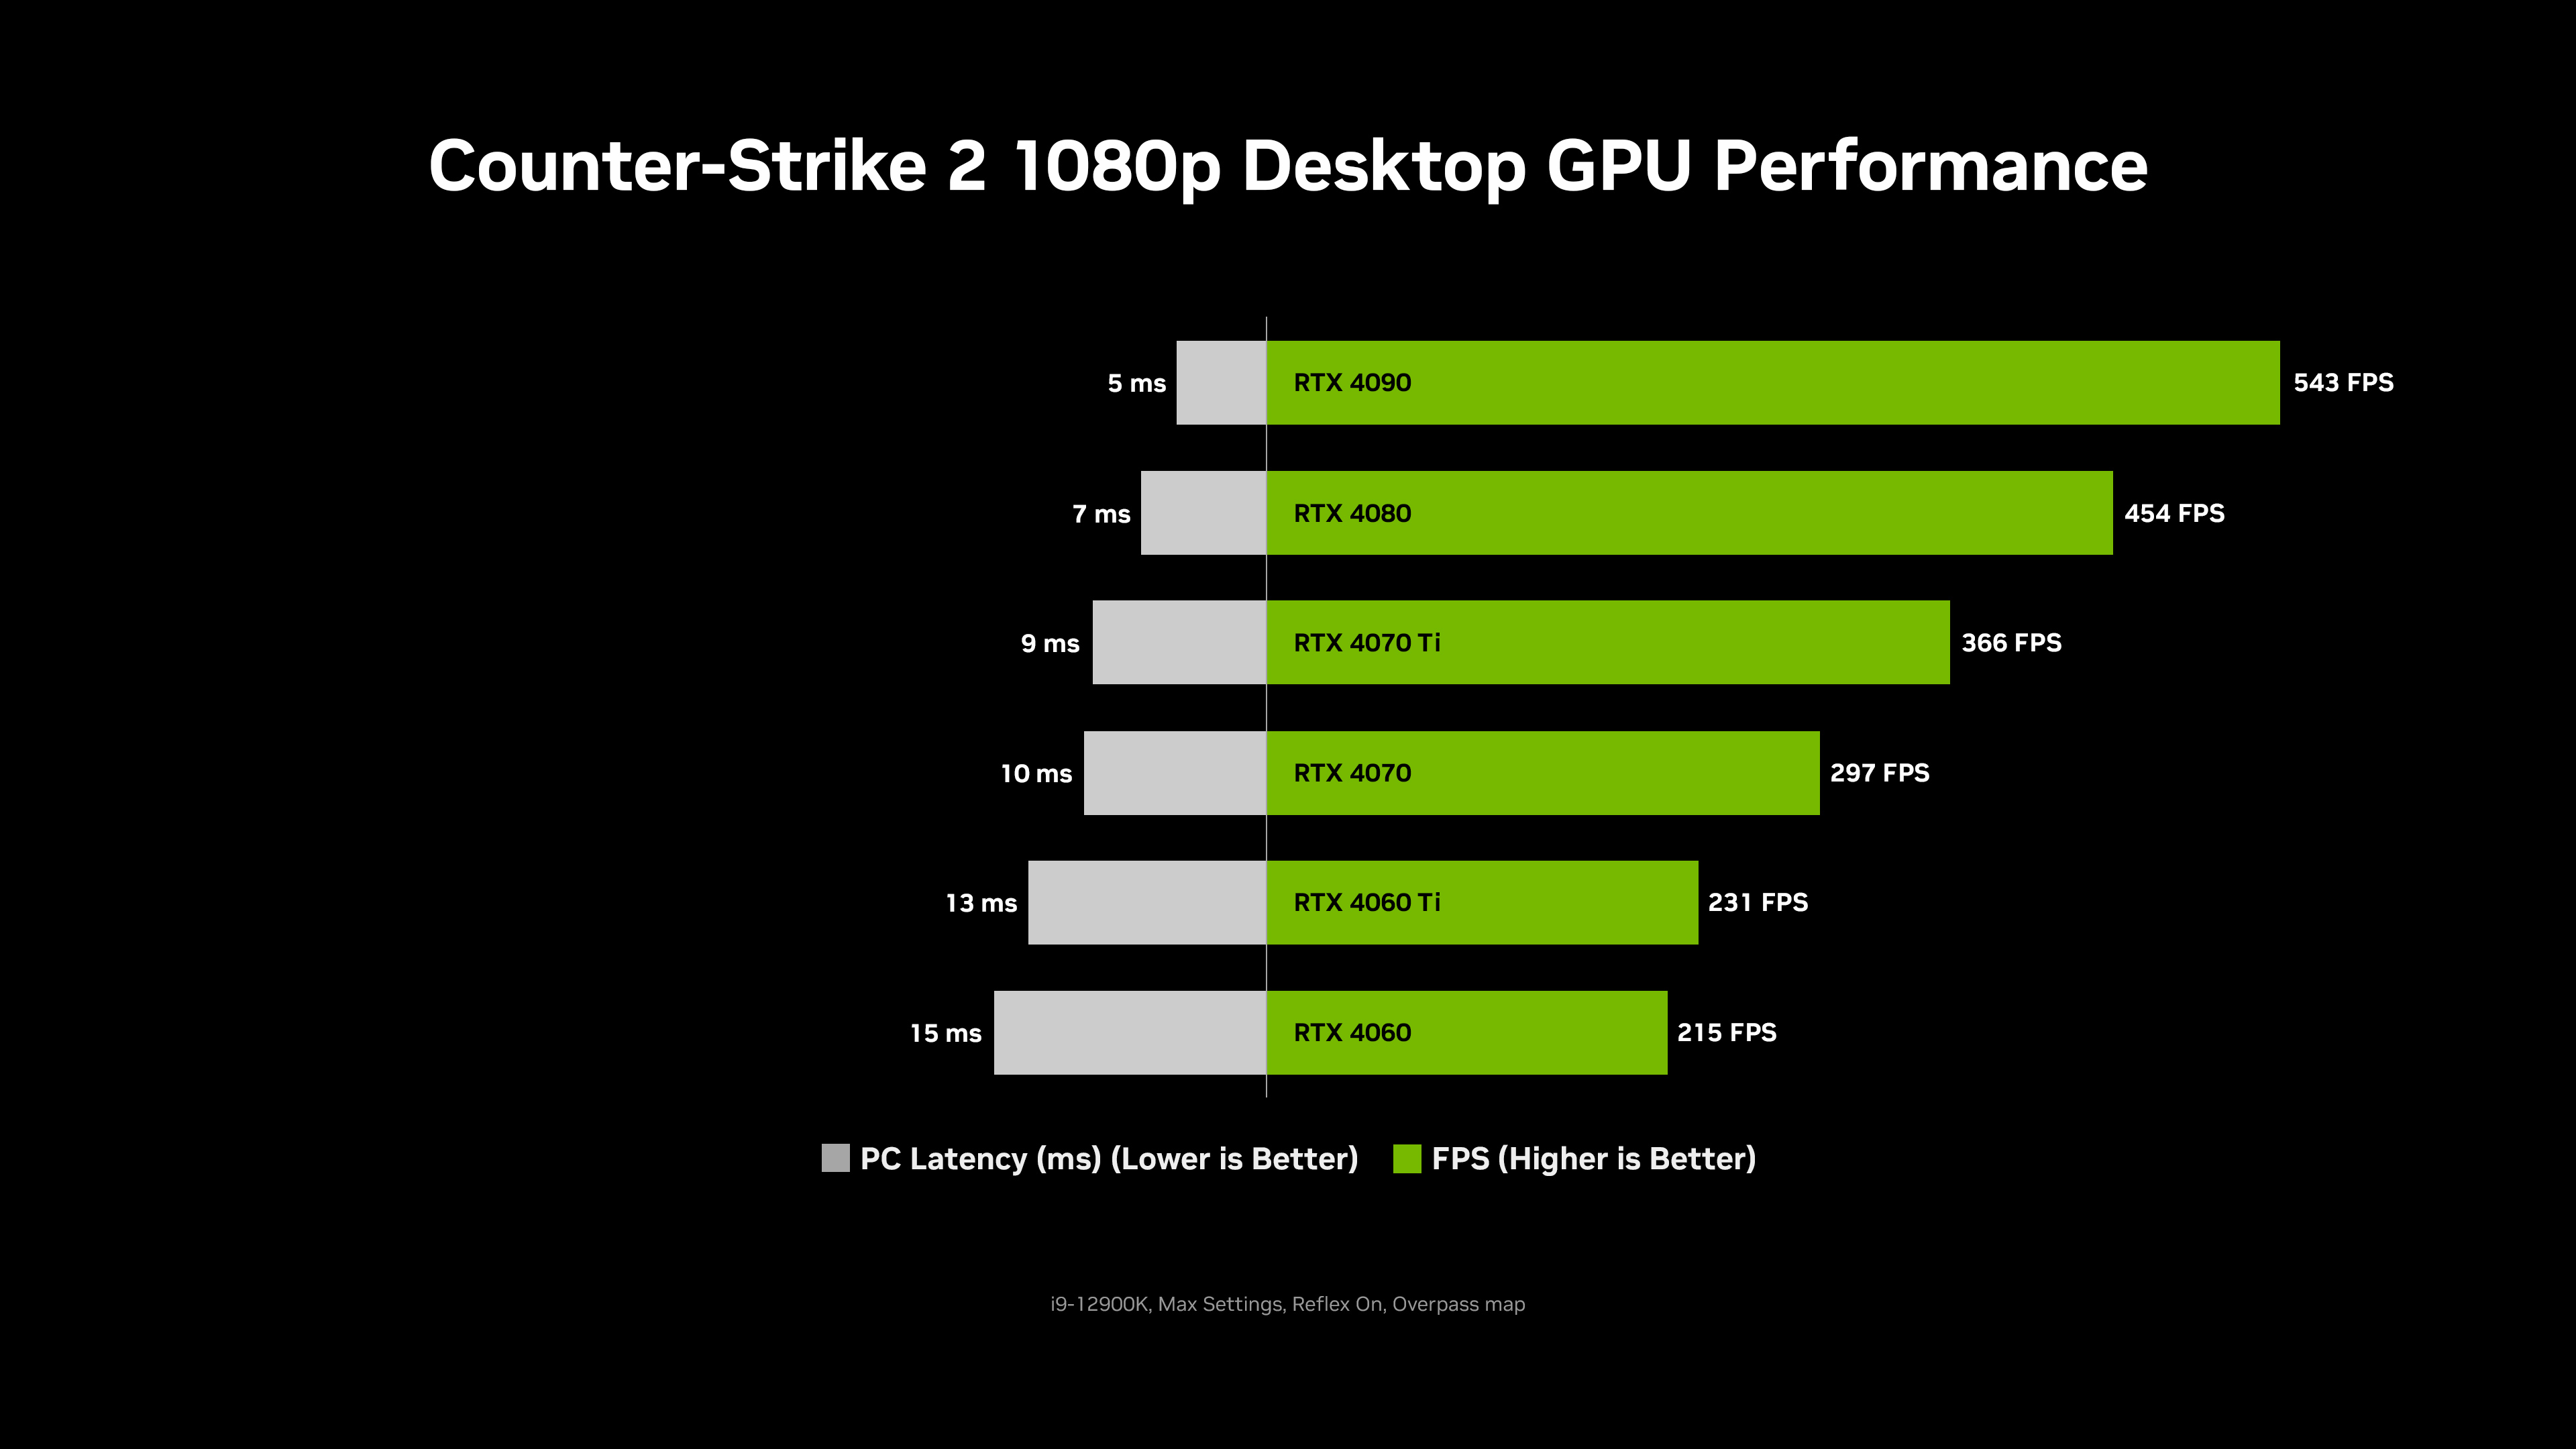 Counter-Strike 2 1080p Desktop GPU Performance5 msRTX 40907 msRTX 40809 msRTX 4070 10 msRTX 407013 msRTX 4060 231 FPS15 msRTX 4060215 FPSPC Latency (ms) (Lower is Better)FPS (Higher is Better), Max Settings, Reflex On, Overpass map297 FPS366 FPS454 FPS543 FPS